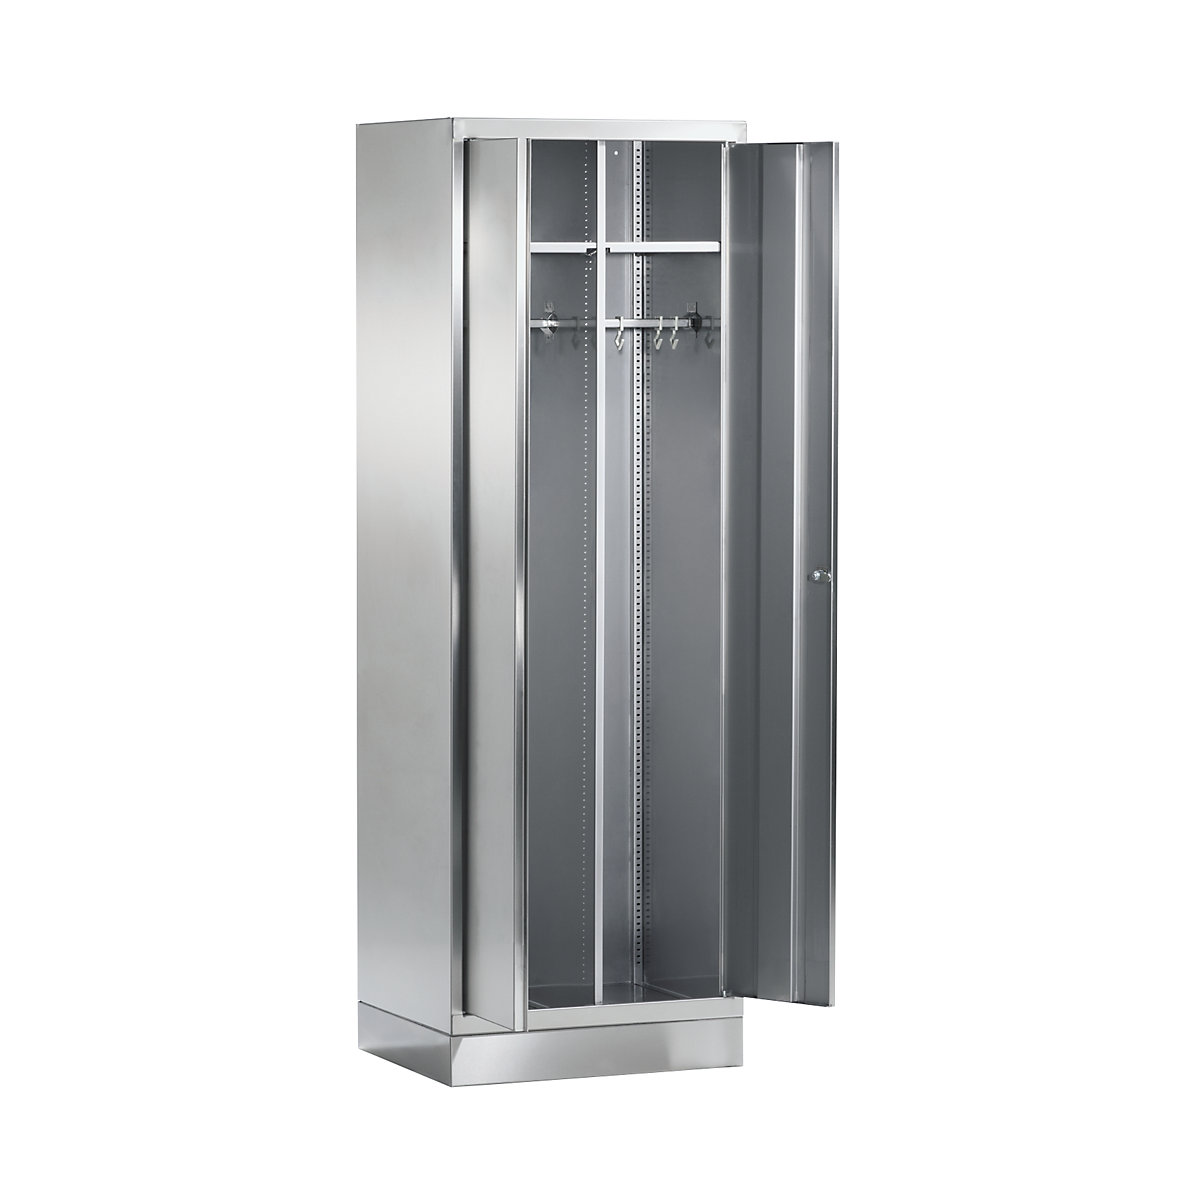 Stainless steel cupboard, cloakroom locker, 2 compartments, HxWxD 1800 x 600 x 500 mm